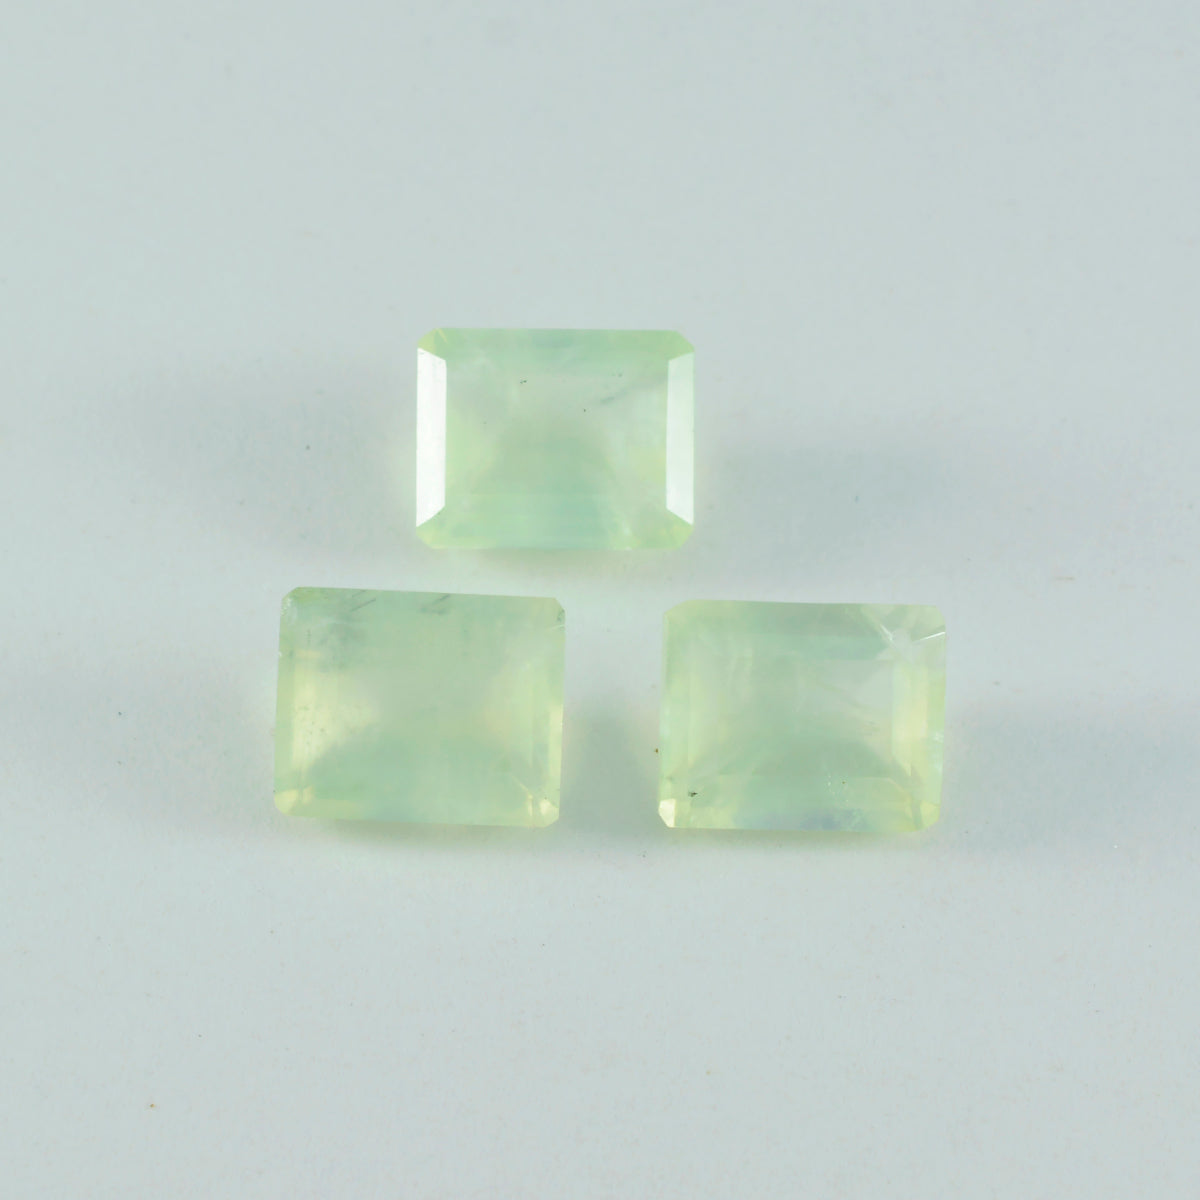 riyogems 1pc グリーン プレナイト ファセット 9x11 mm 八角形の素晴らしい品質の宝石